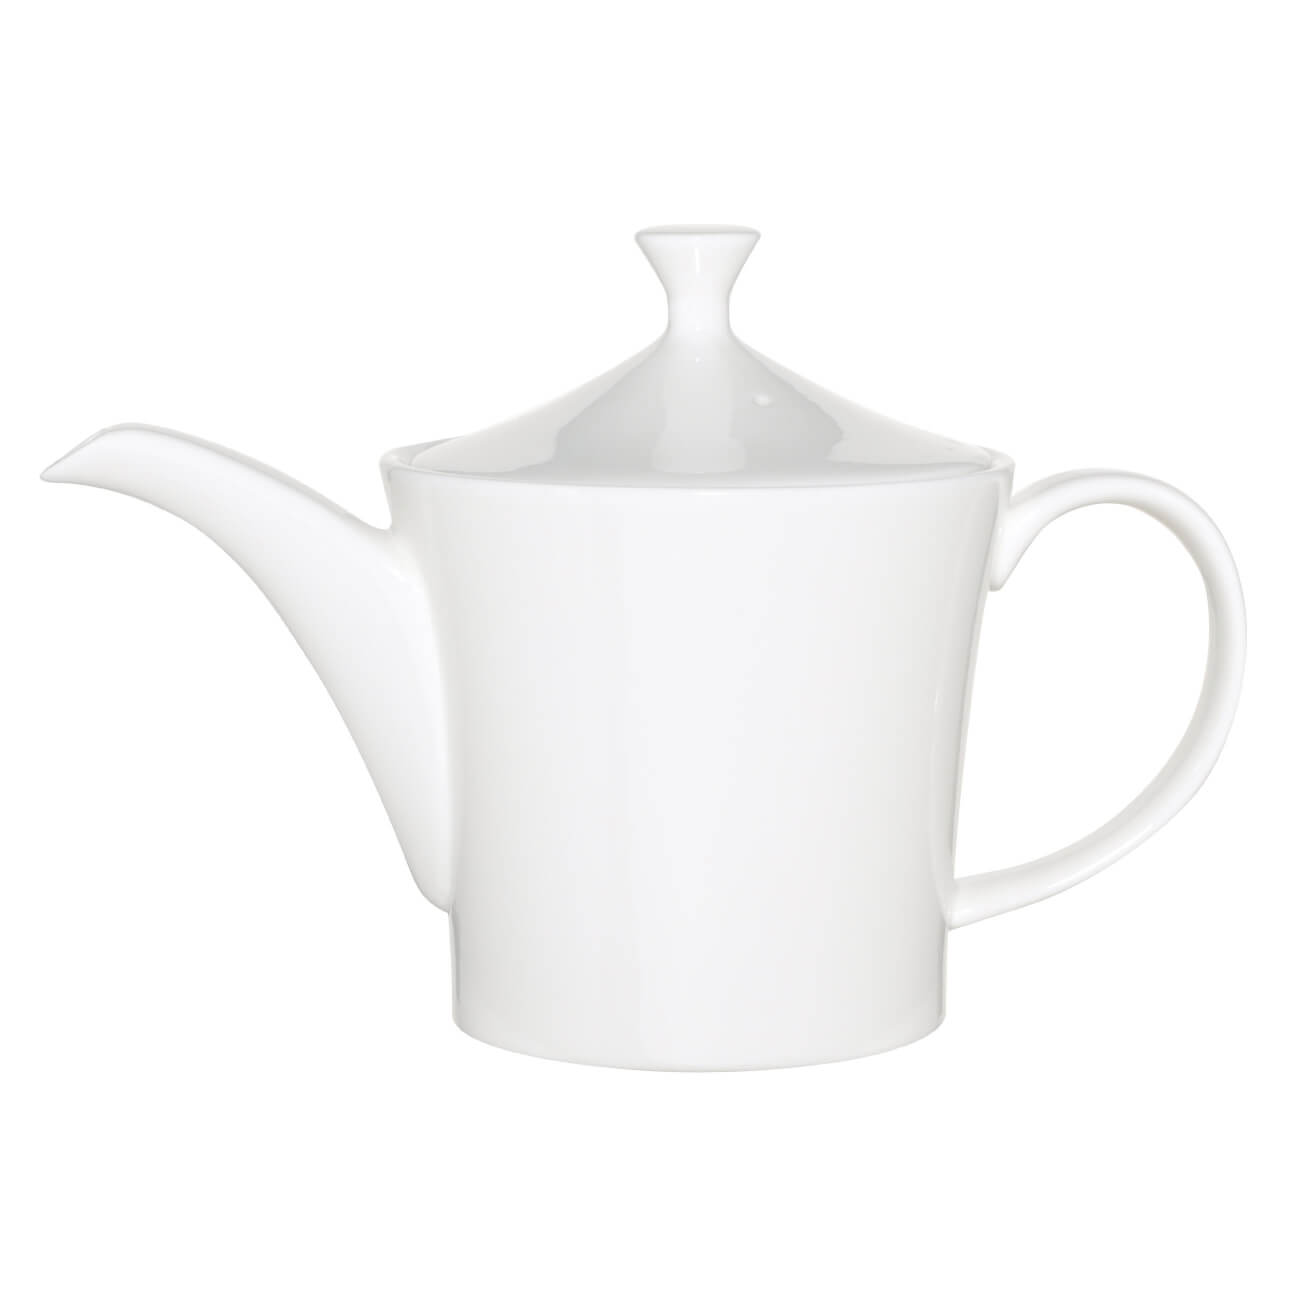 Чайник заварочный, 800 мл, фарфор F, белый, Ideal white заварочный чайник dolomite